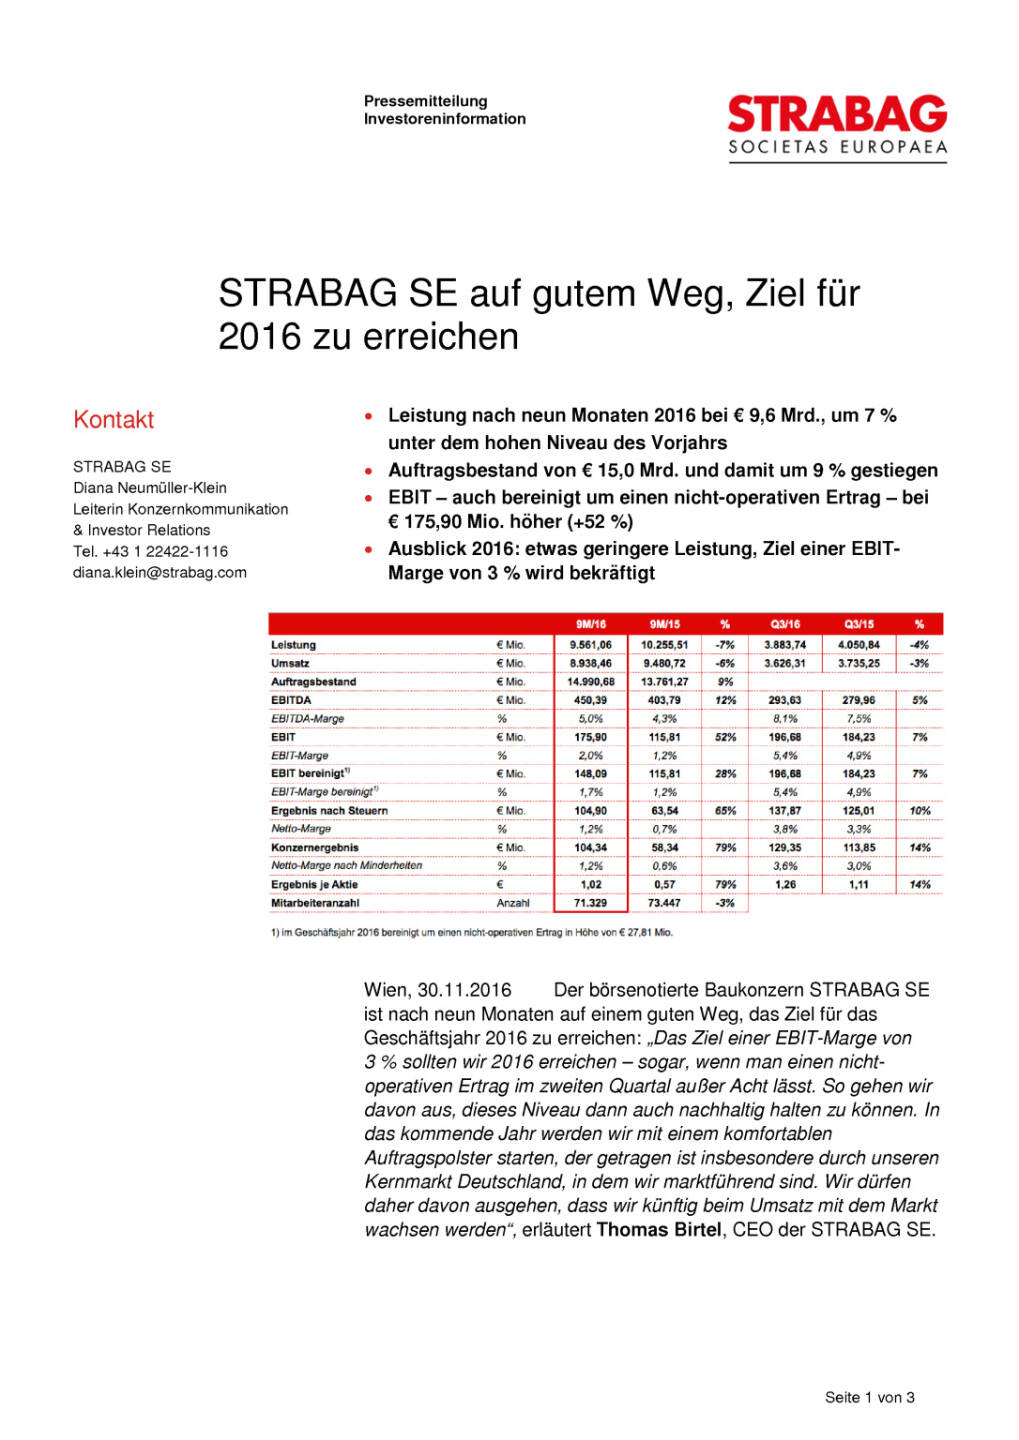 Strabag auf gutem Weg, Seite 1/3, komplettes Dokument unter http://boerse-social.com/static/uploads/file_1999_strabag_auf_gutem_weg.pdf